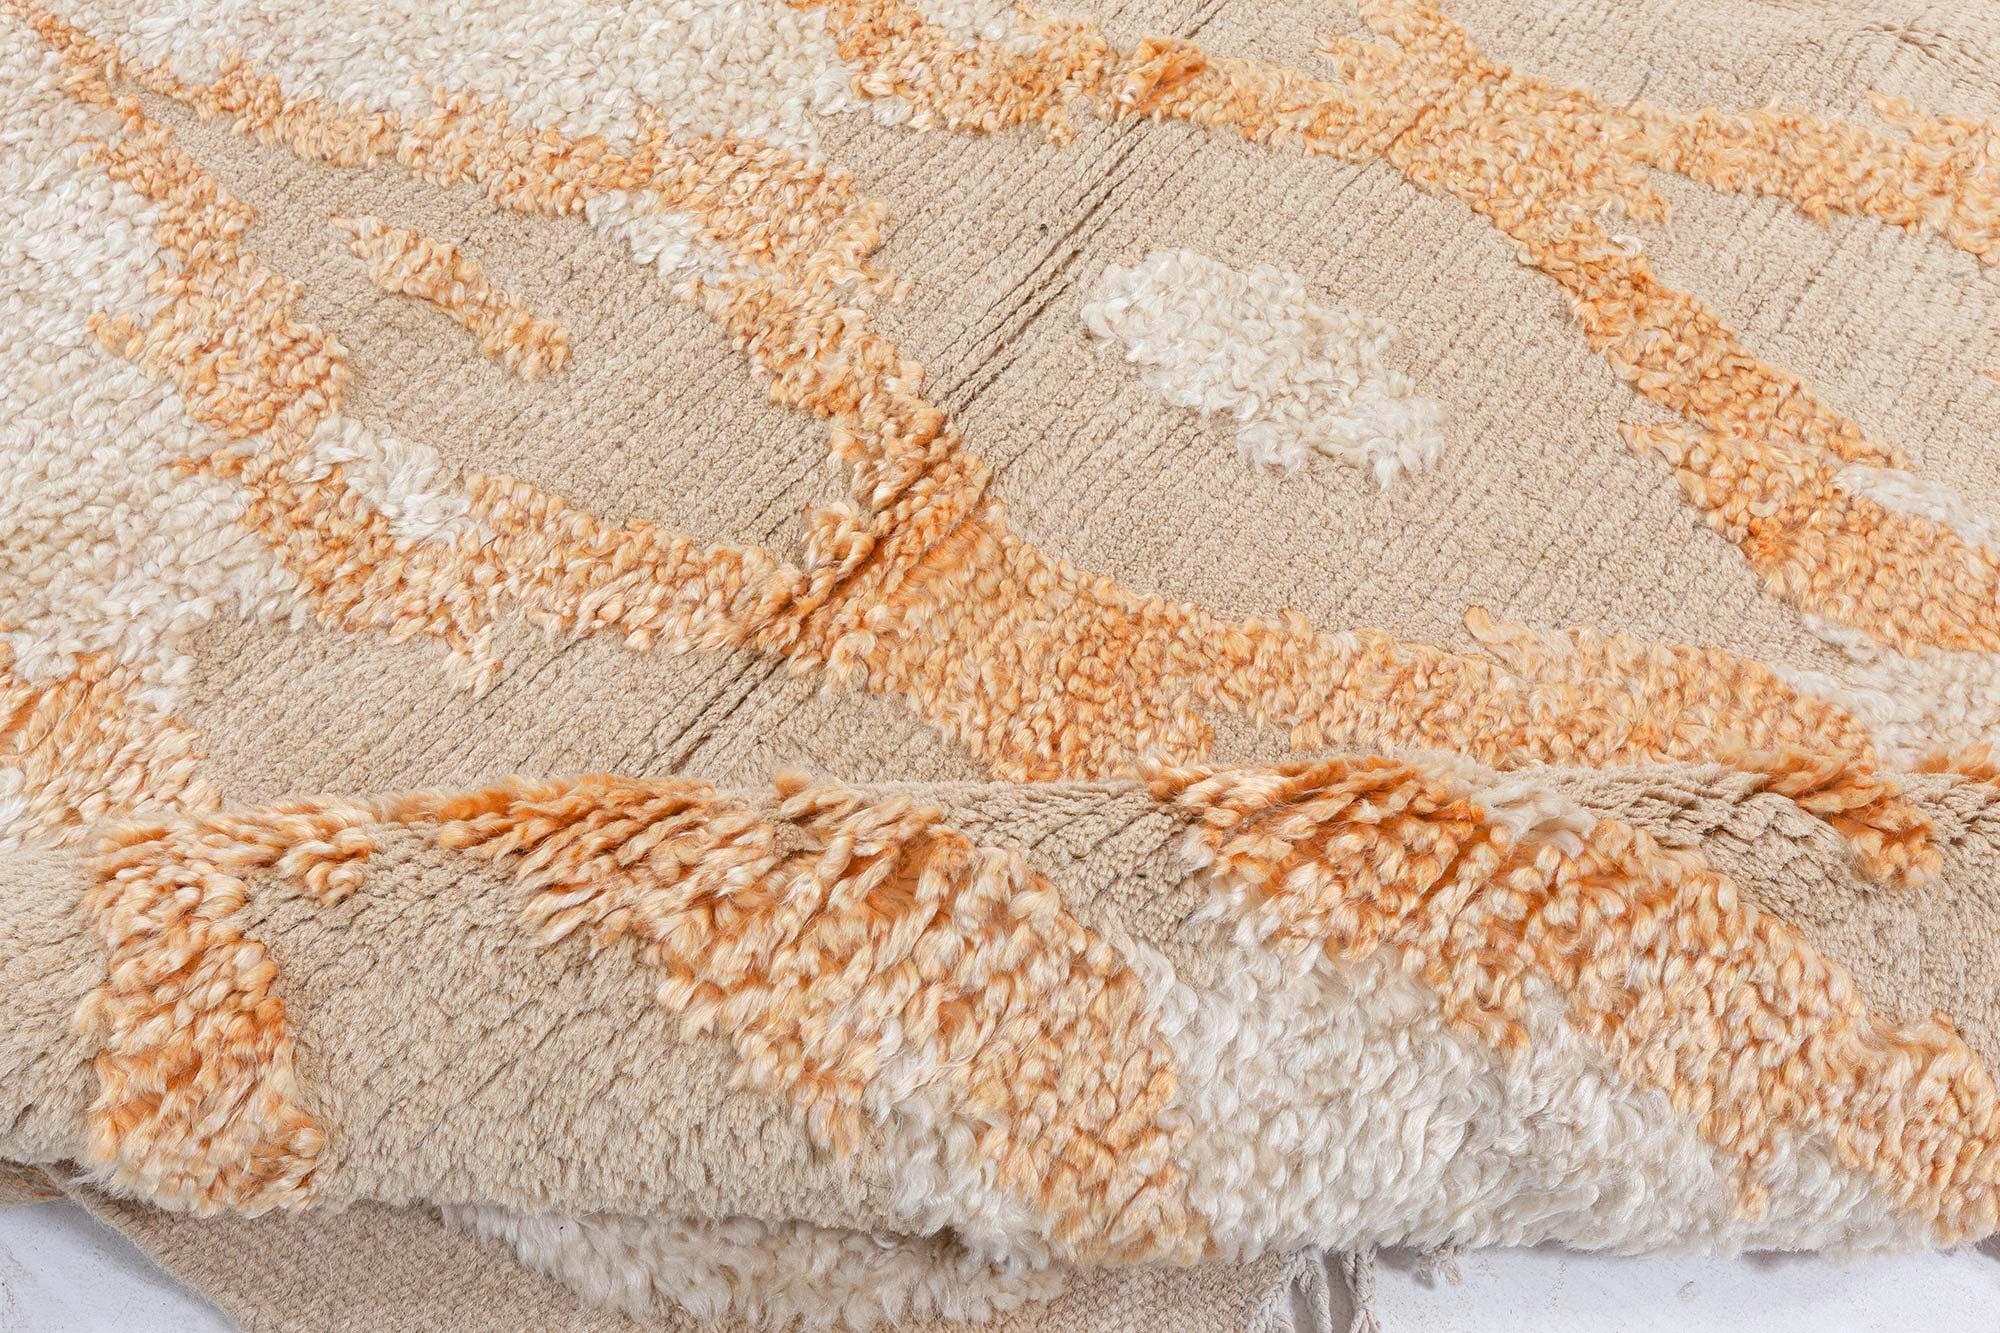 Large One-of-a-kind Kasuri handmade wool rug by Doris Leslie Blau 
Size: 14'2